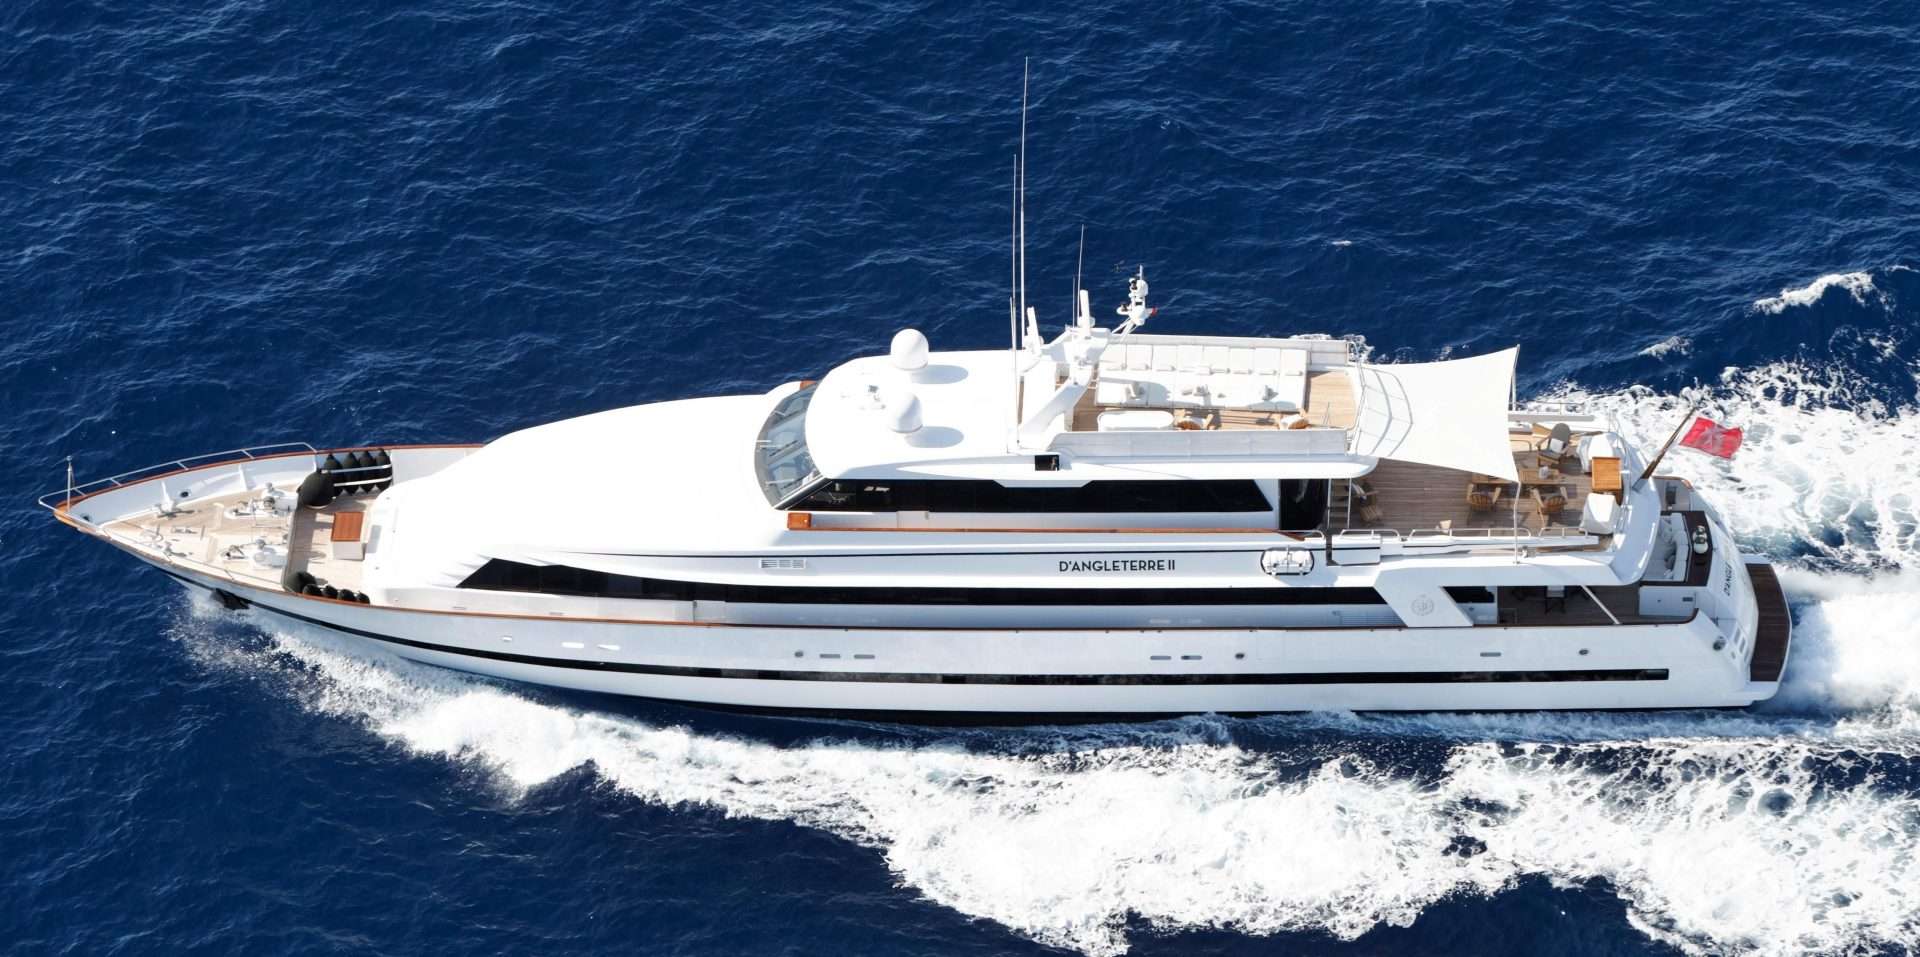 SEA LADY II - Motor Boat Charter Montenegro & Boat hire in W. Med -Naples/Sicily, W. Med -Riviera/Cors/Sard., W. Med - Spain/Balearics 1